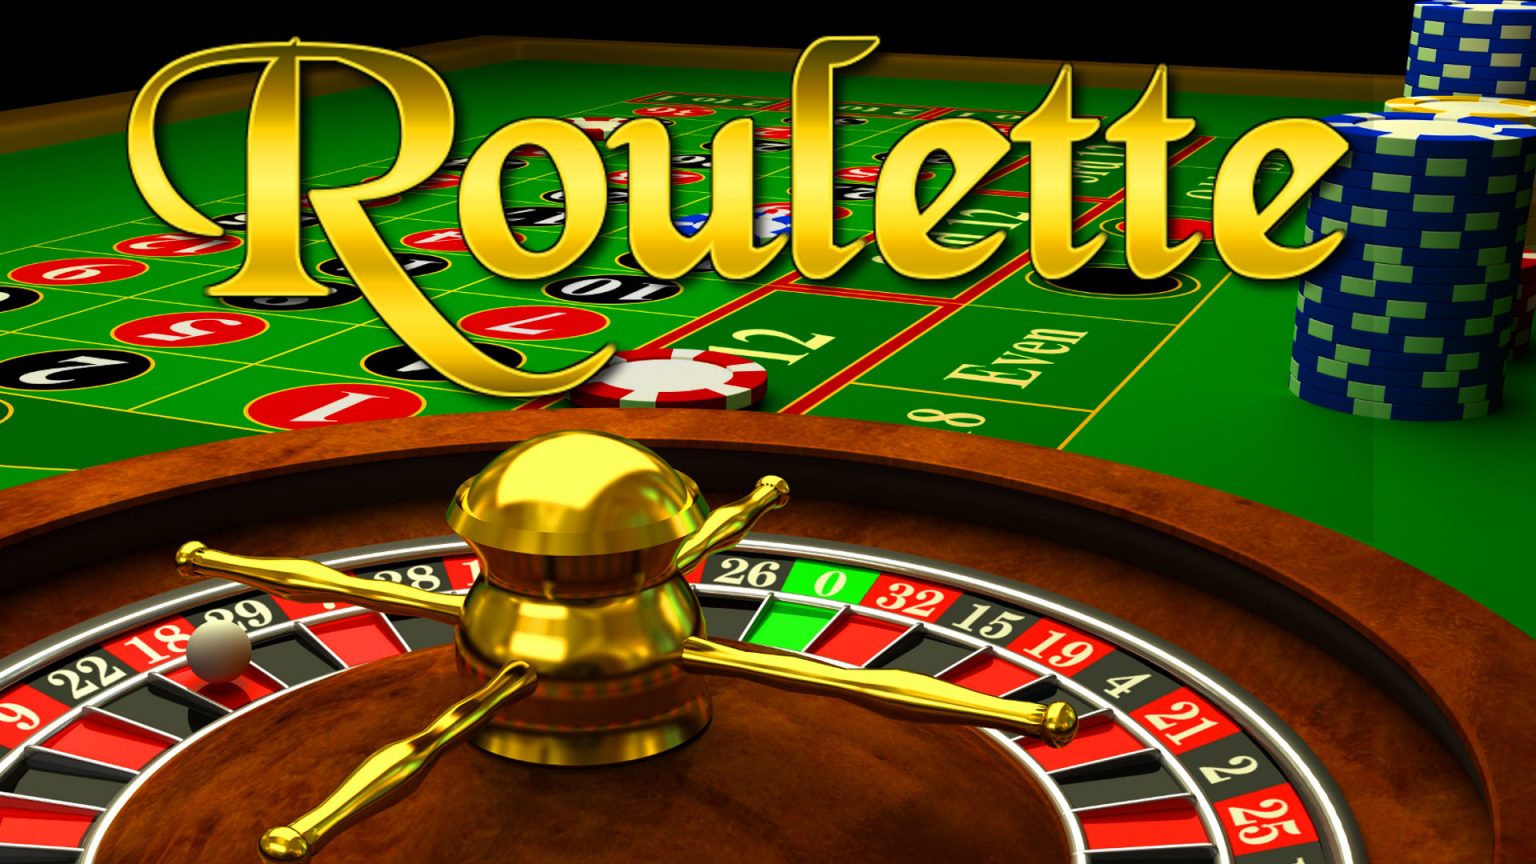 premium french roulette